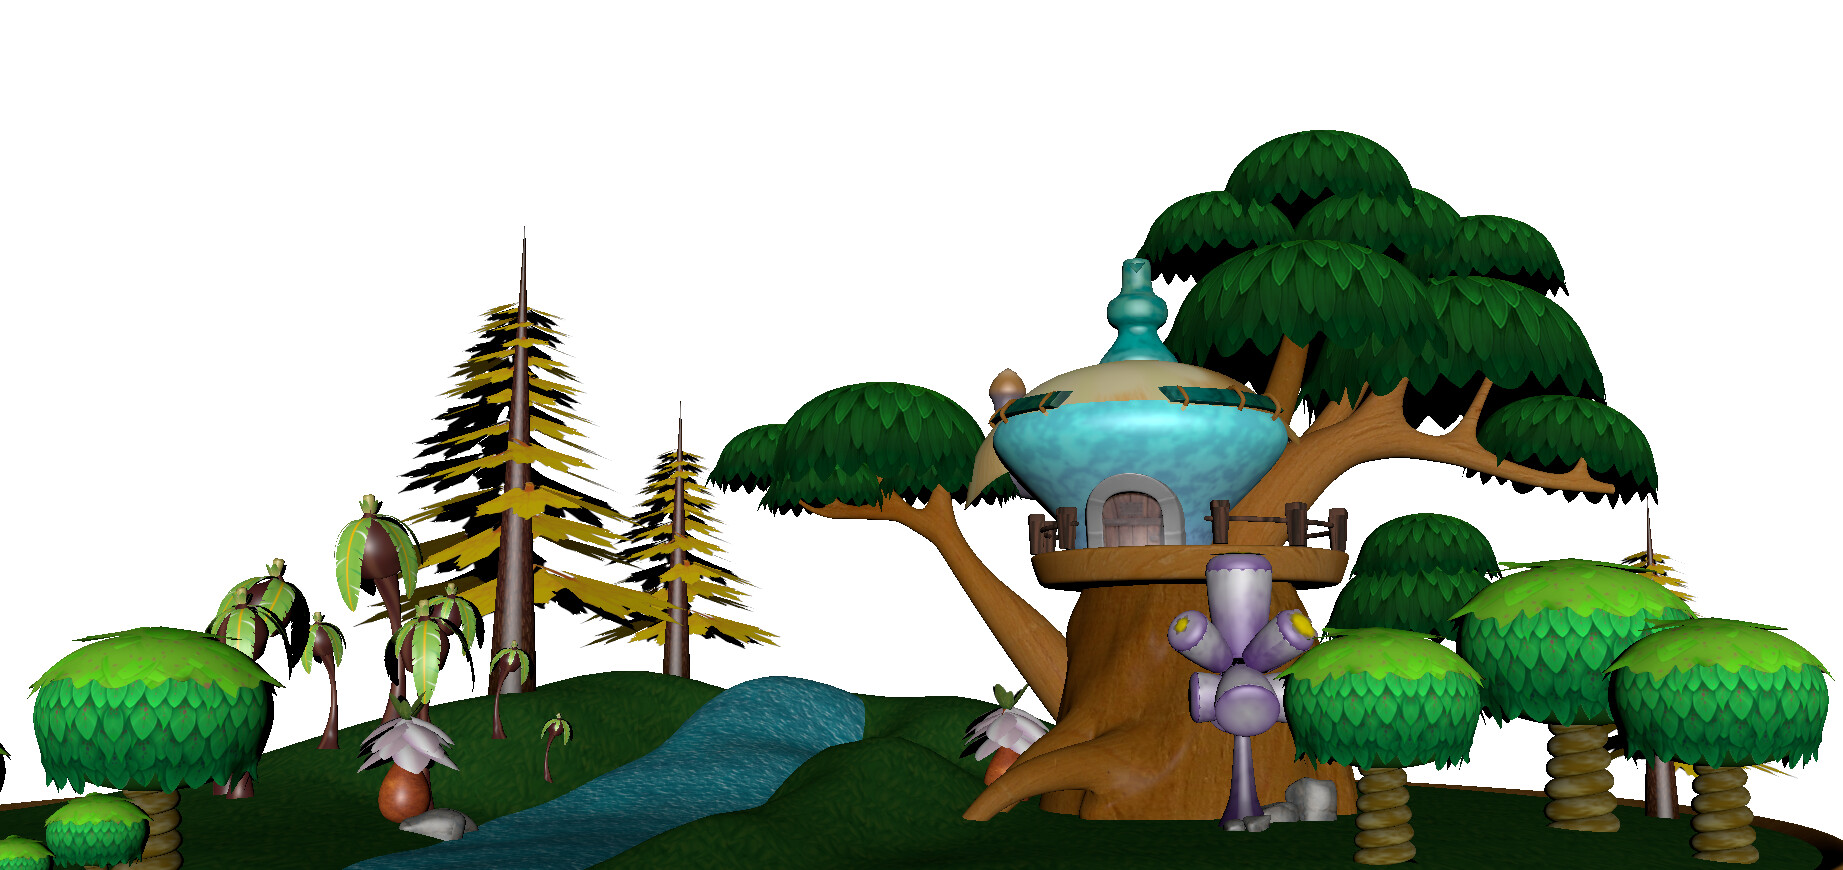 kiran kumar - Cartoon Tree House